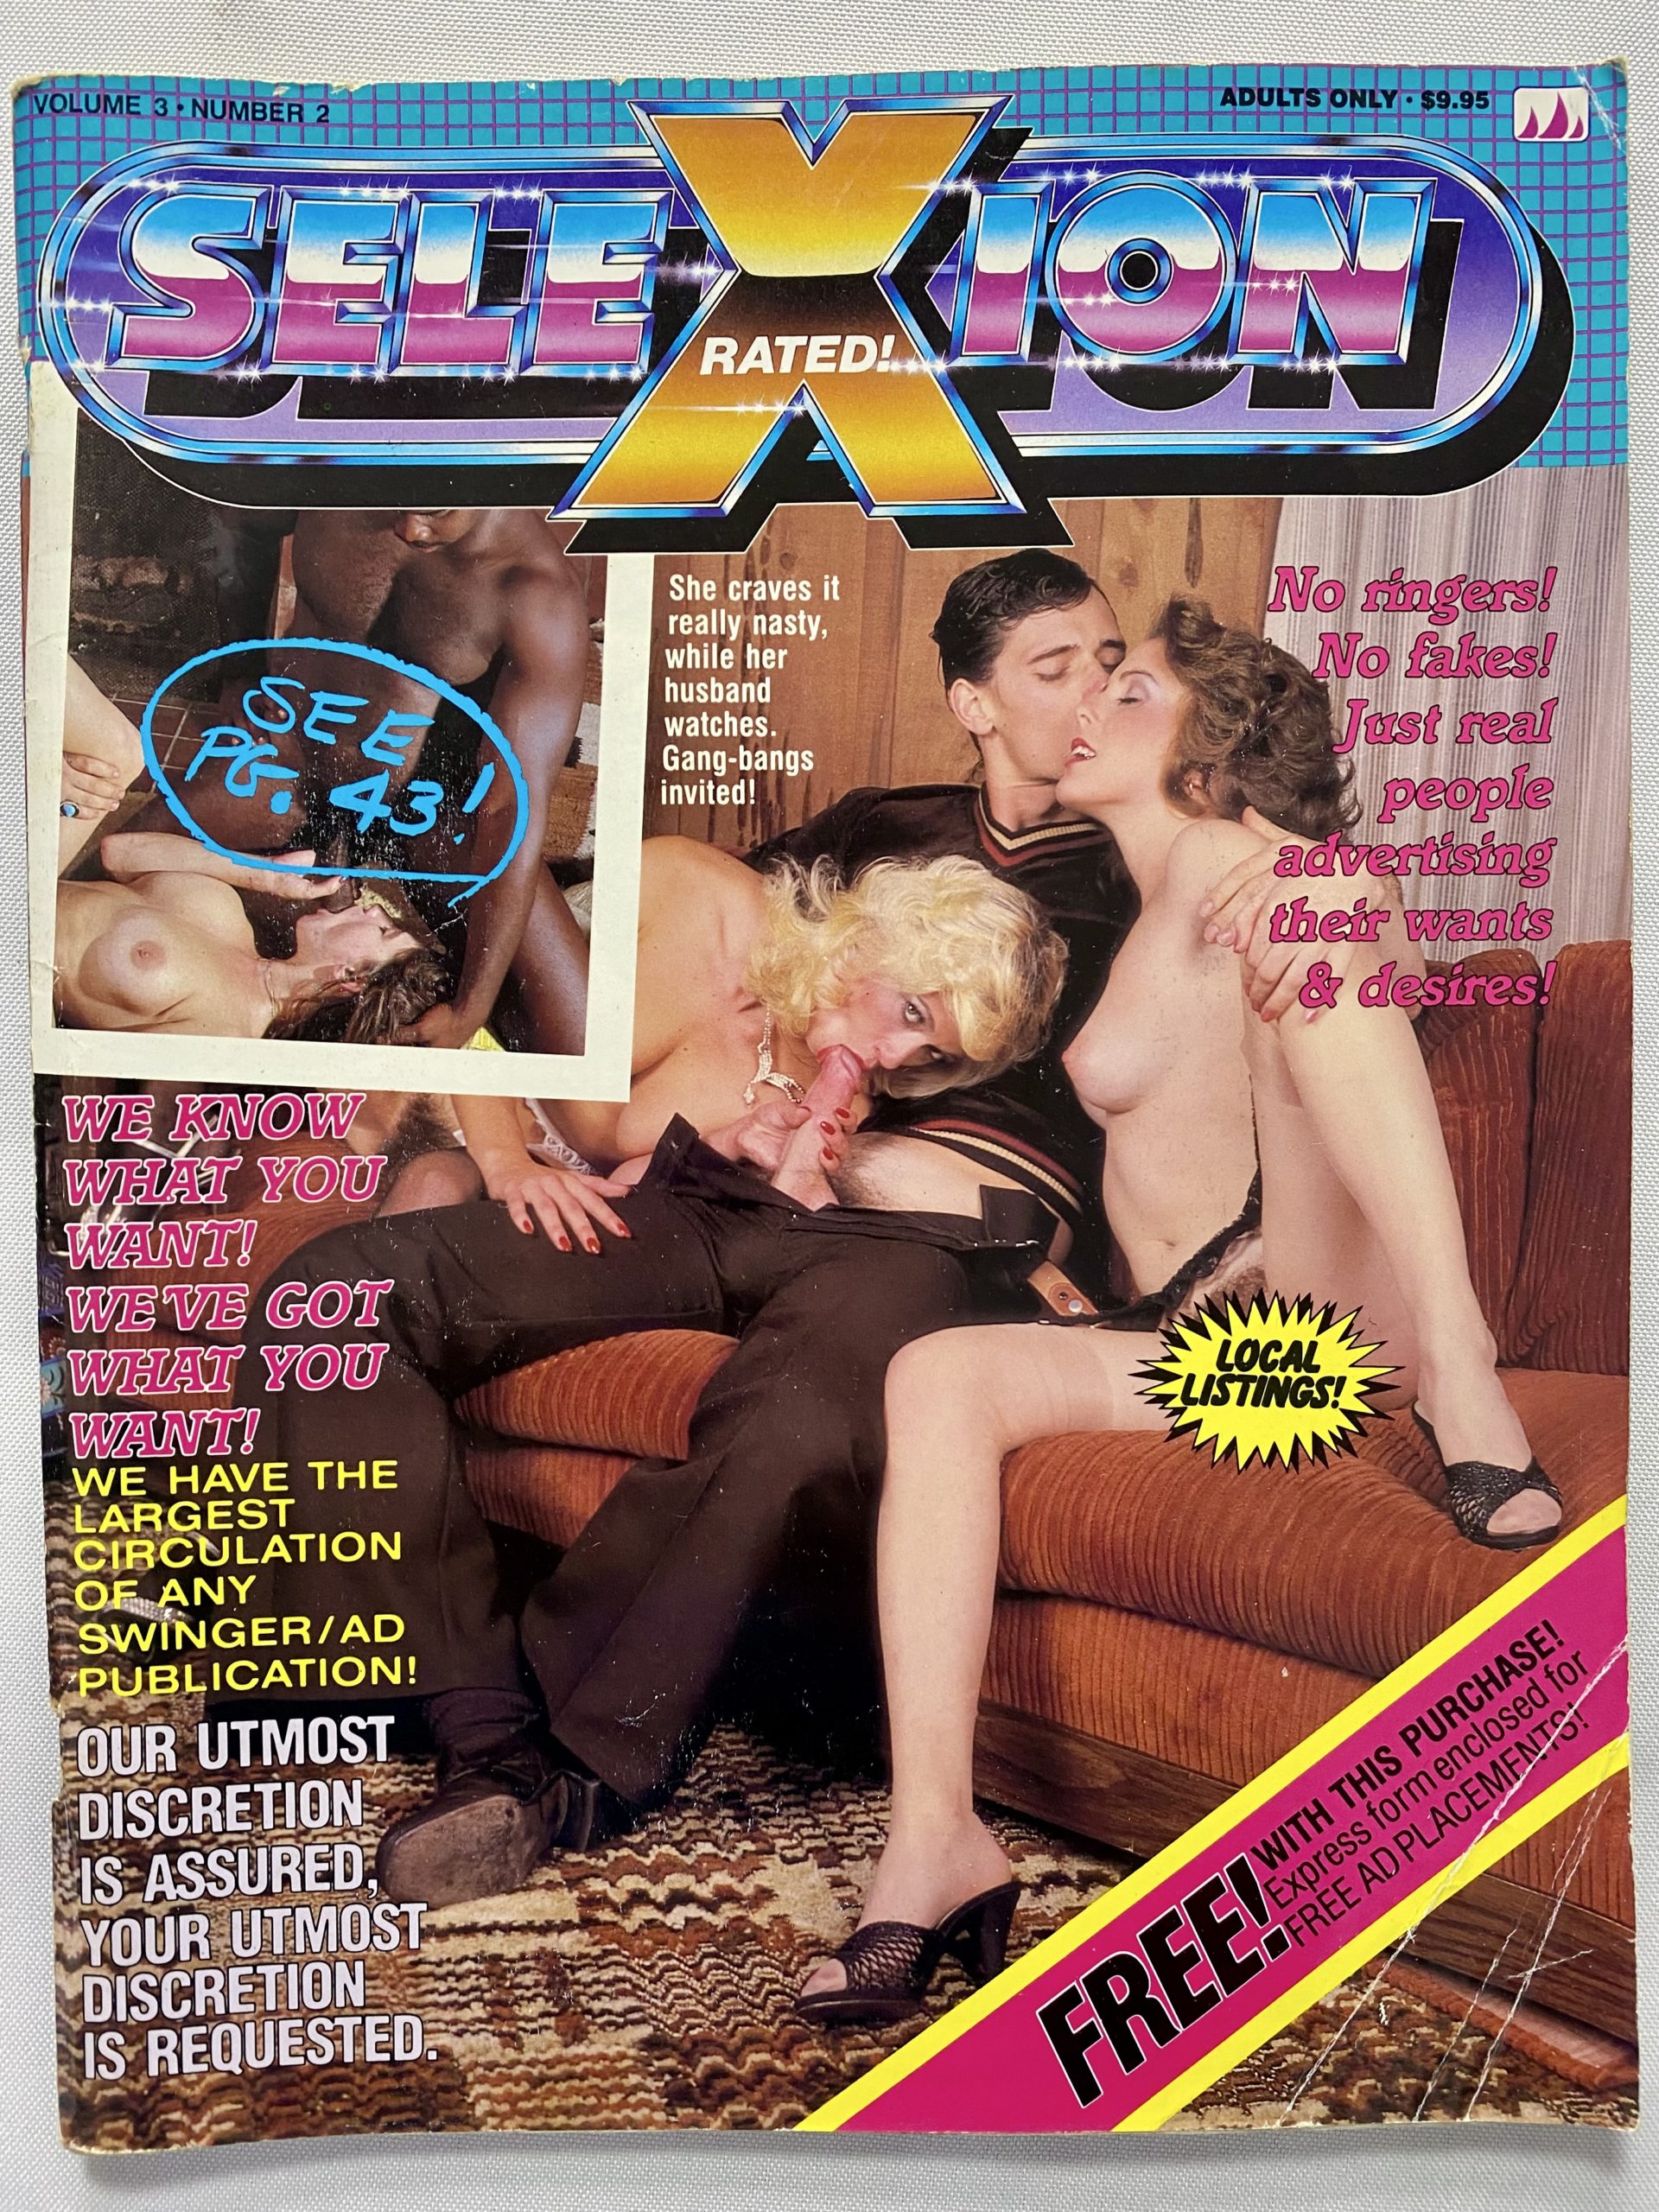 Underground Porn Magazines 80s - 80s Porn Magazine Ads | Sex Pictures Pass